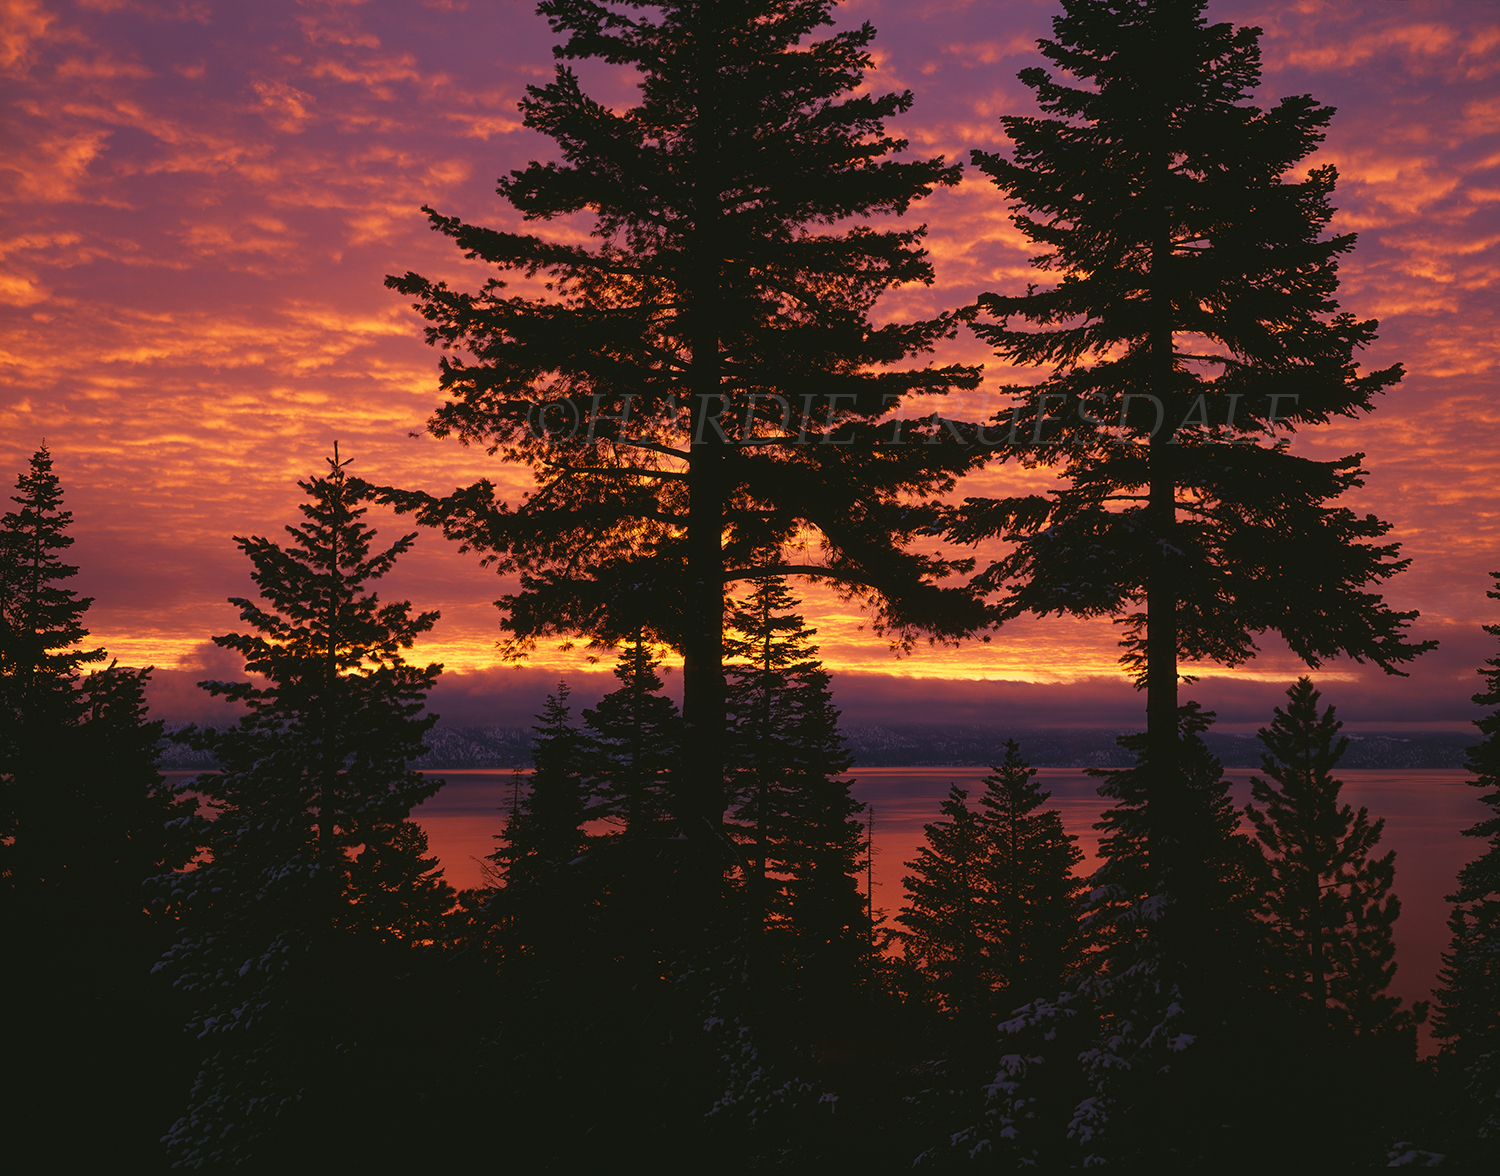 CA#20 "Sunrise, Lake Tahoe"